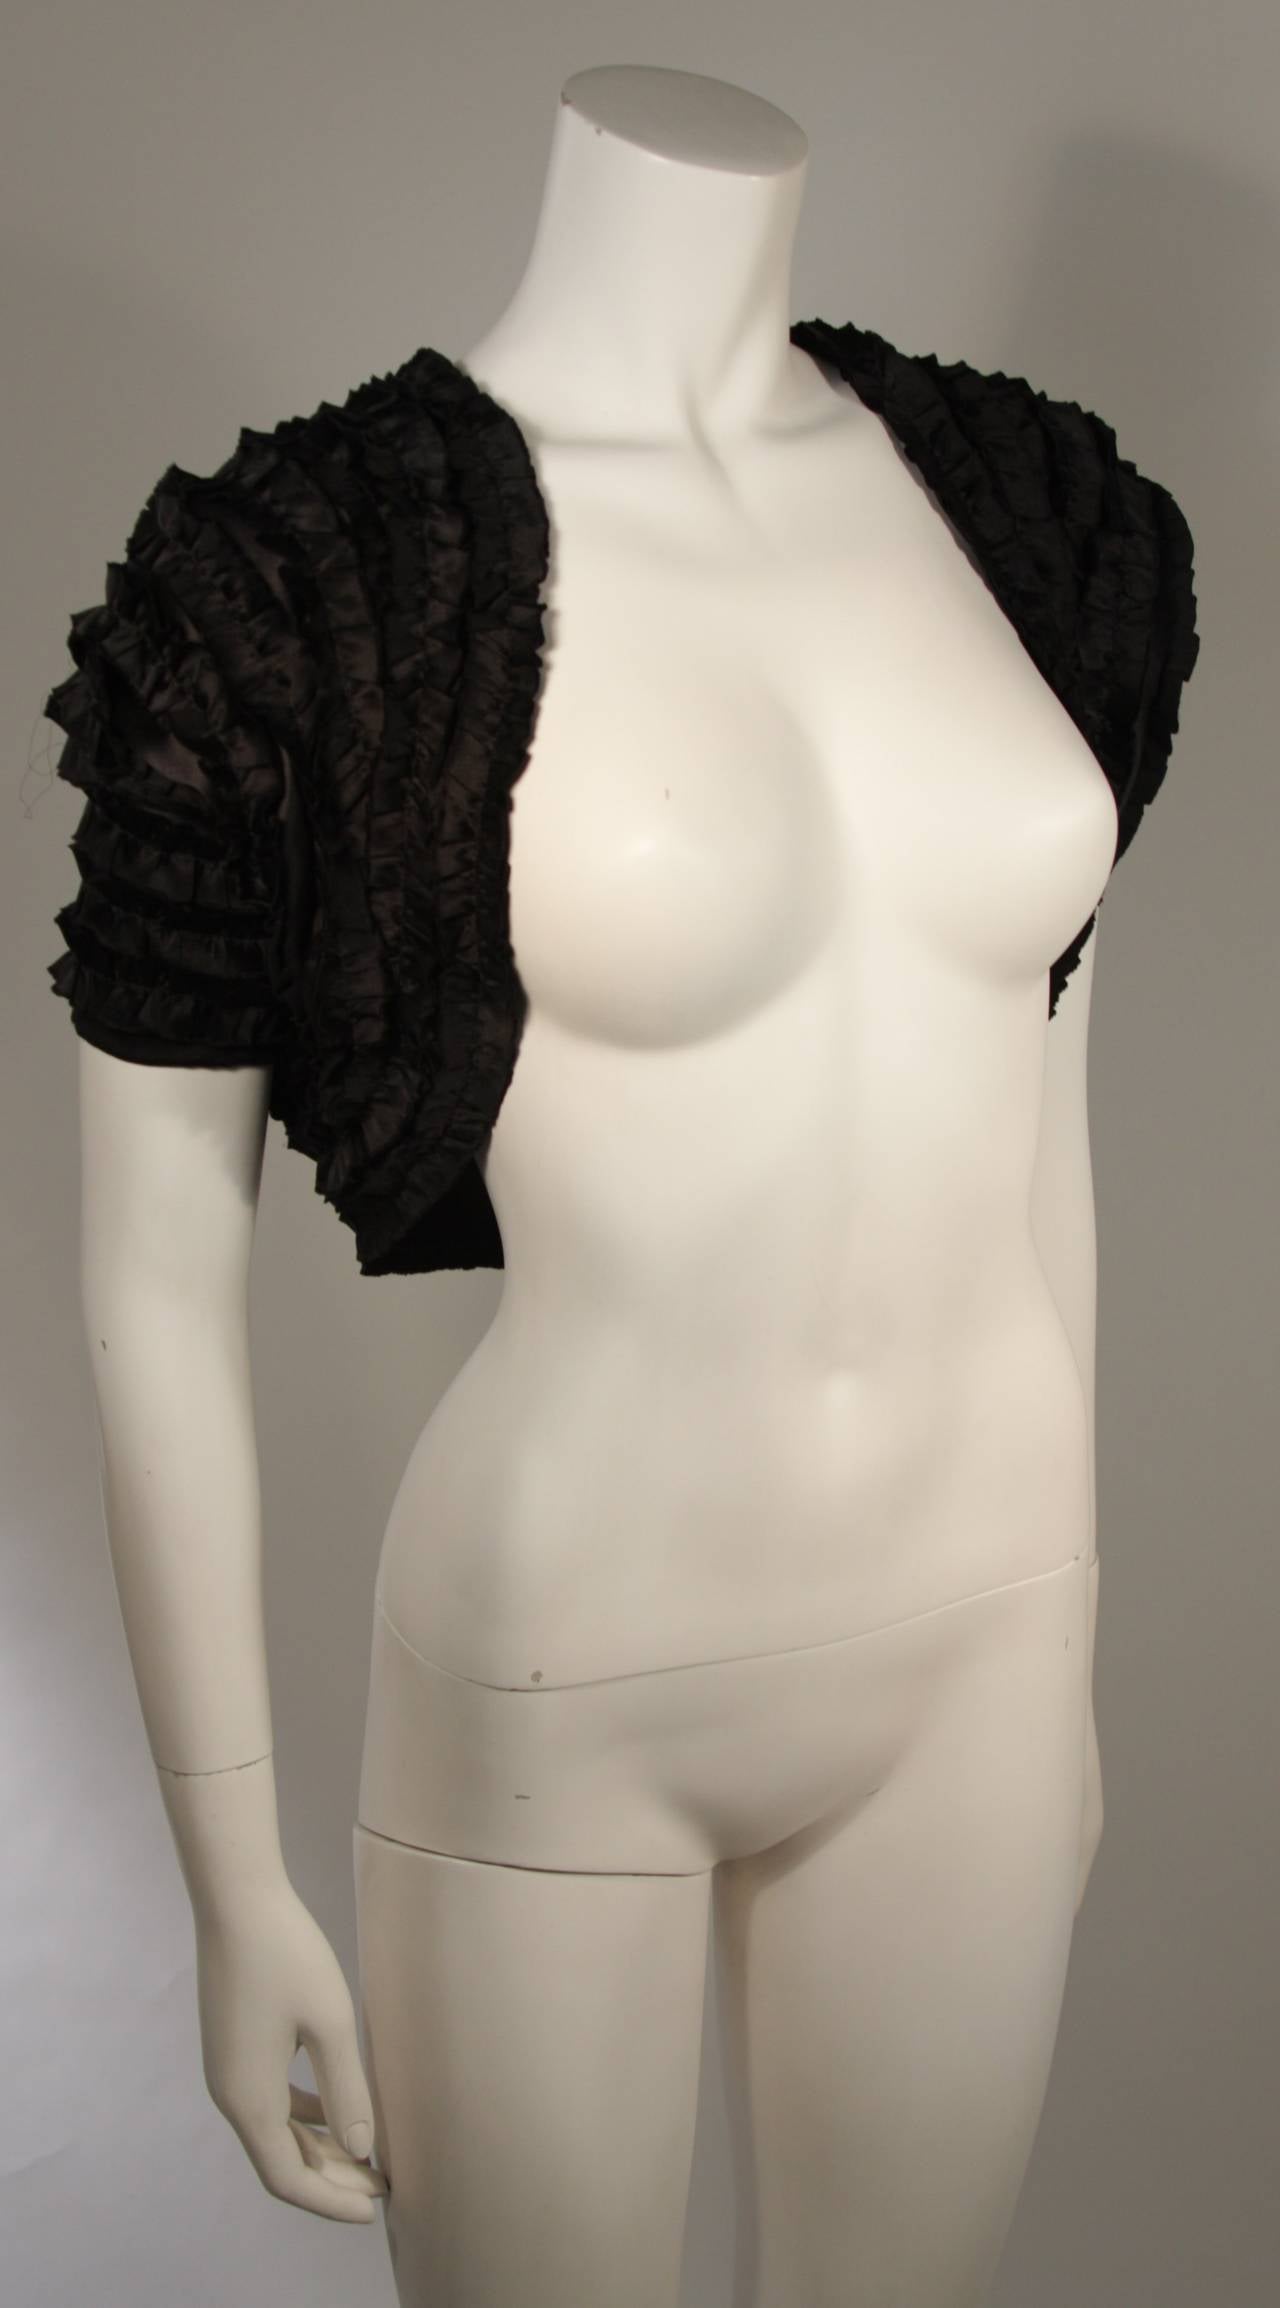 Elizabeth Mason Couture ruffled bolero
Black silk 
Size 2 
Measures  13.5